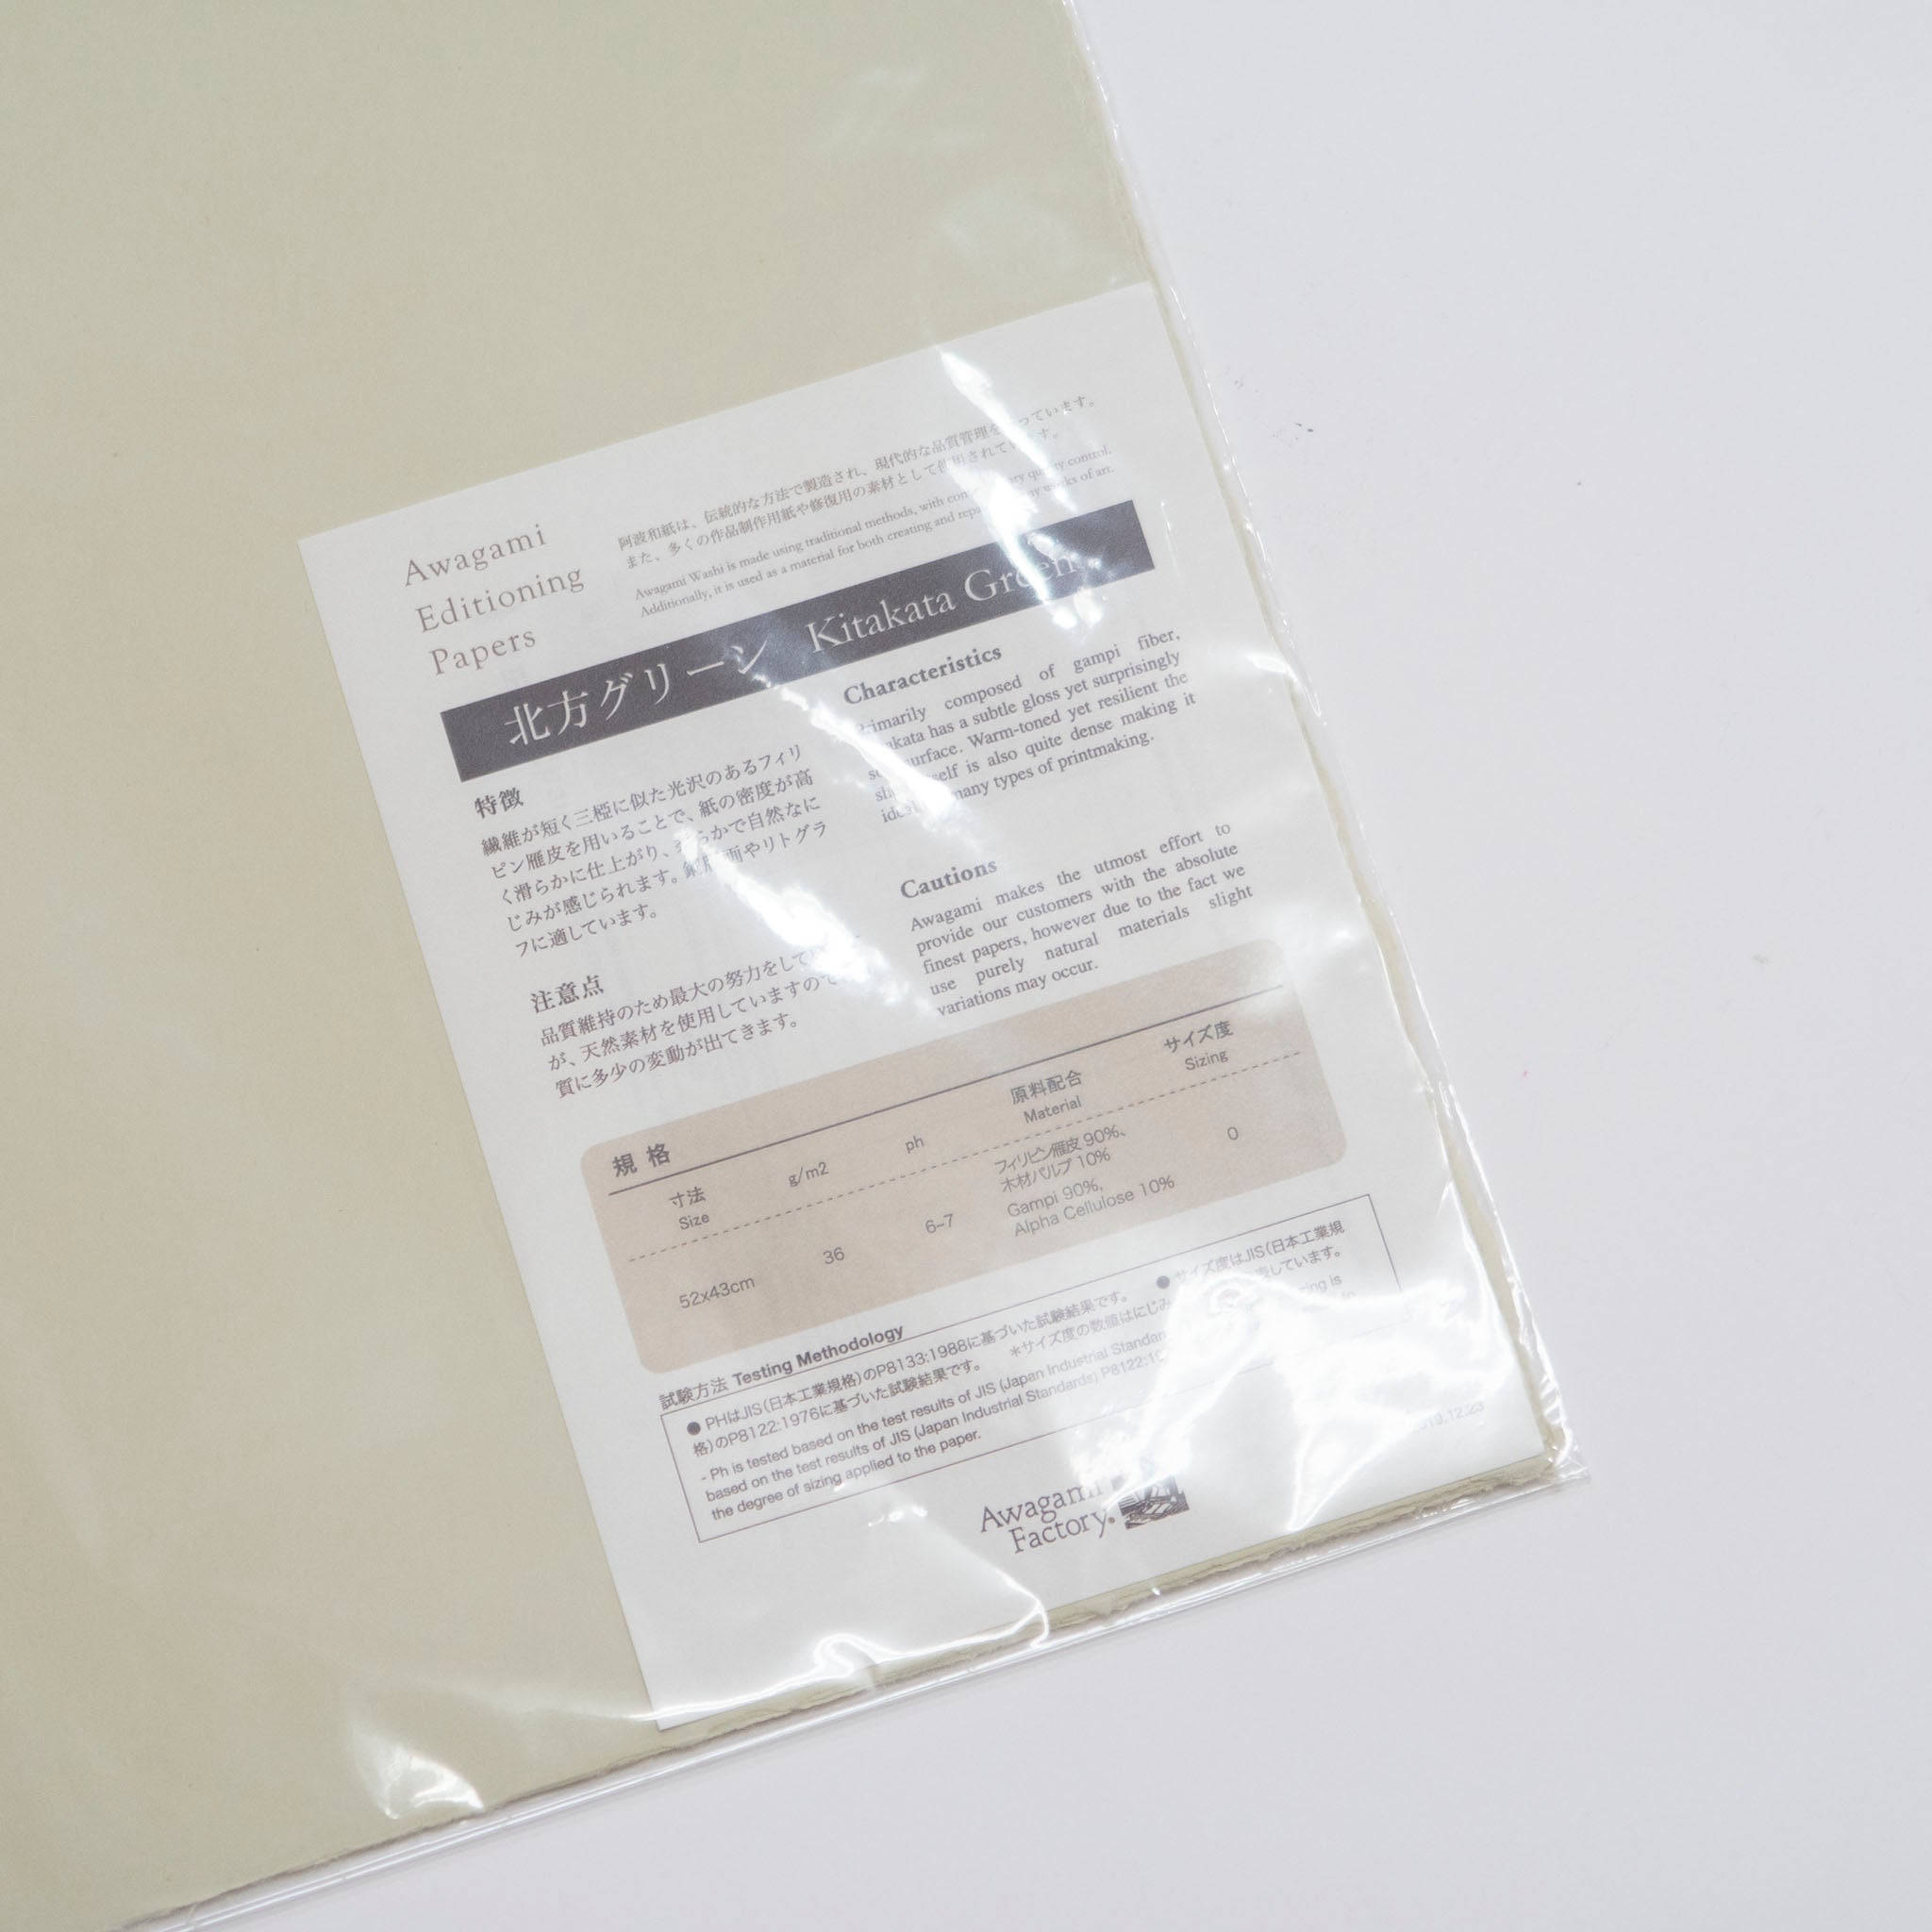 Awagami Japanese Paper - Kitakata Select Cool 36gsm